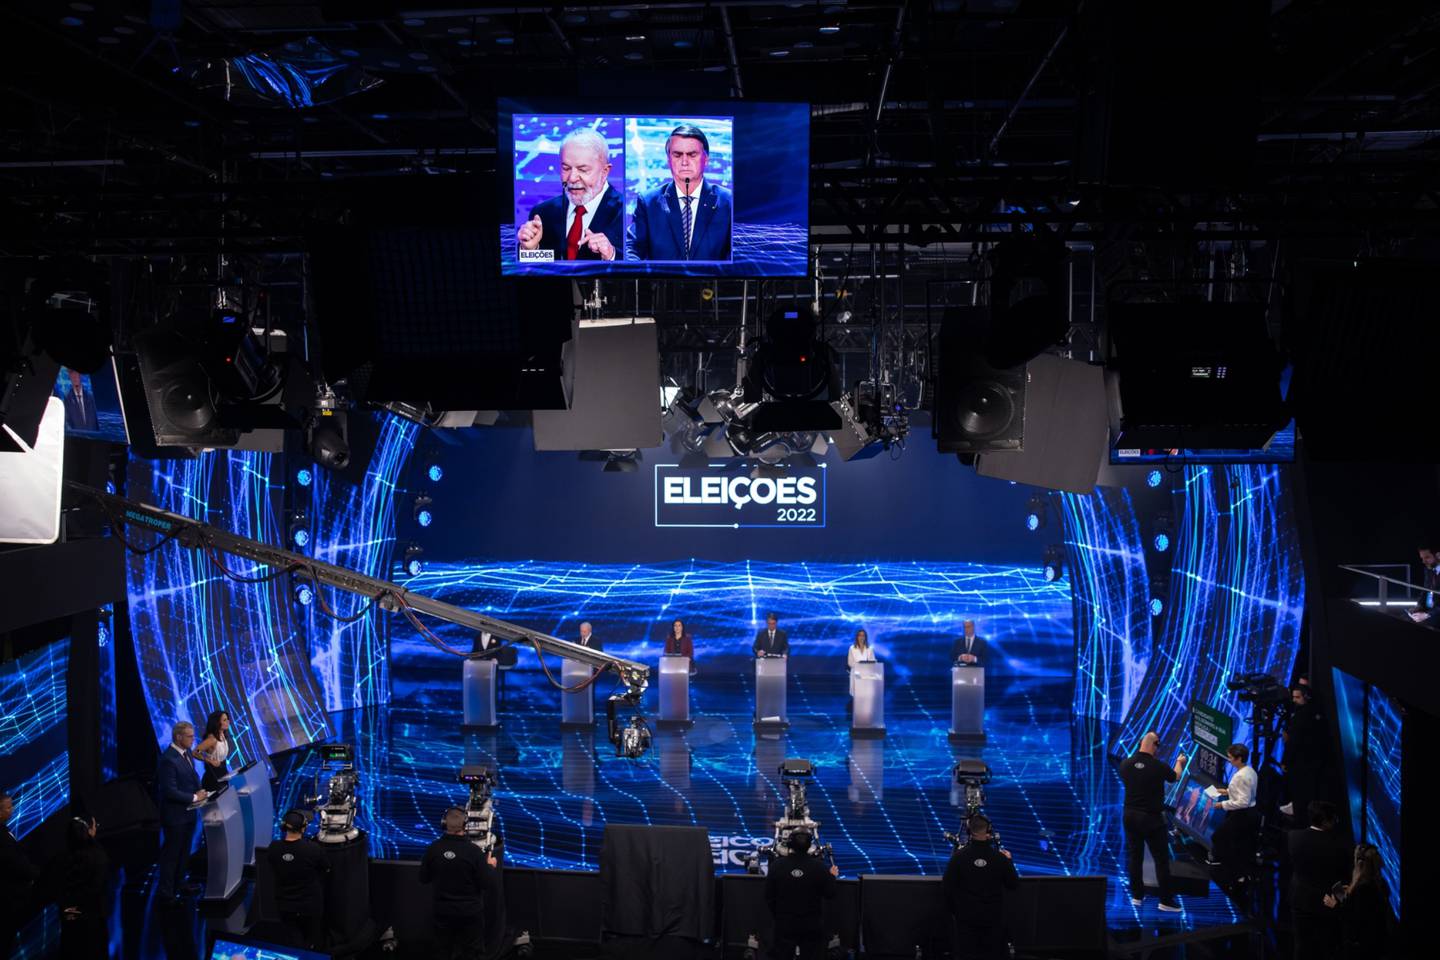 Images of Jair Bolsonaro, Brazil's president, and Luiz Inacio Lula da Silva, Brazil's former president, on the screen during the first televised presidential debate in Sao Paulo.